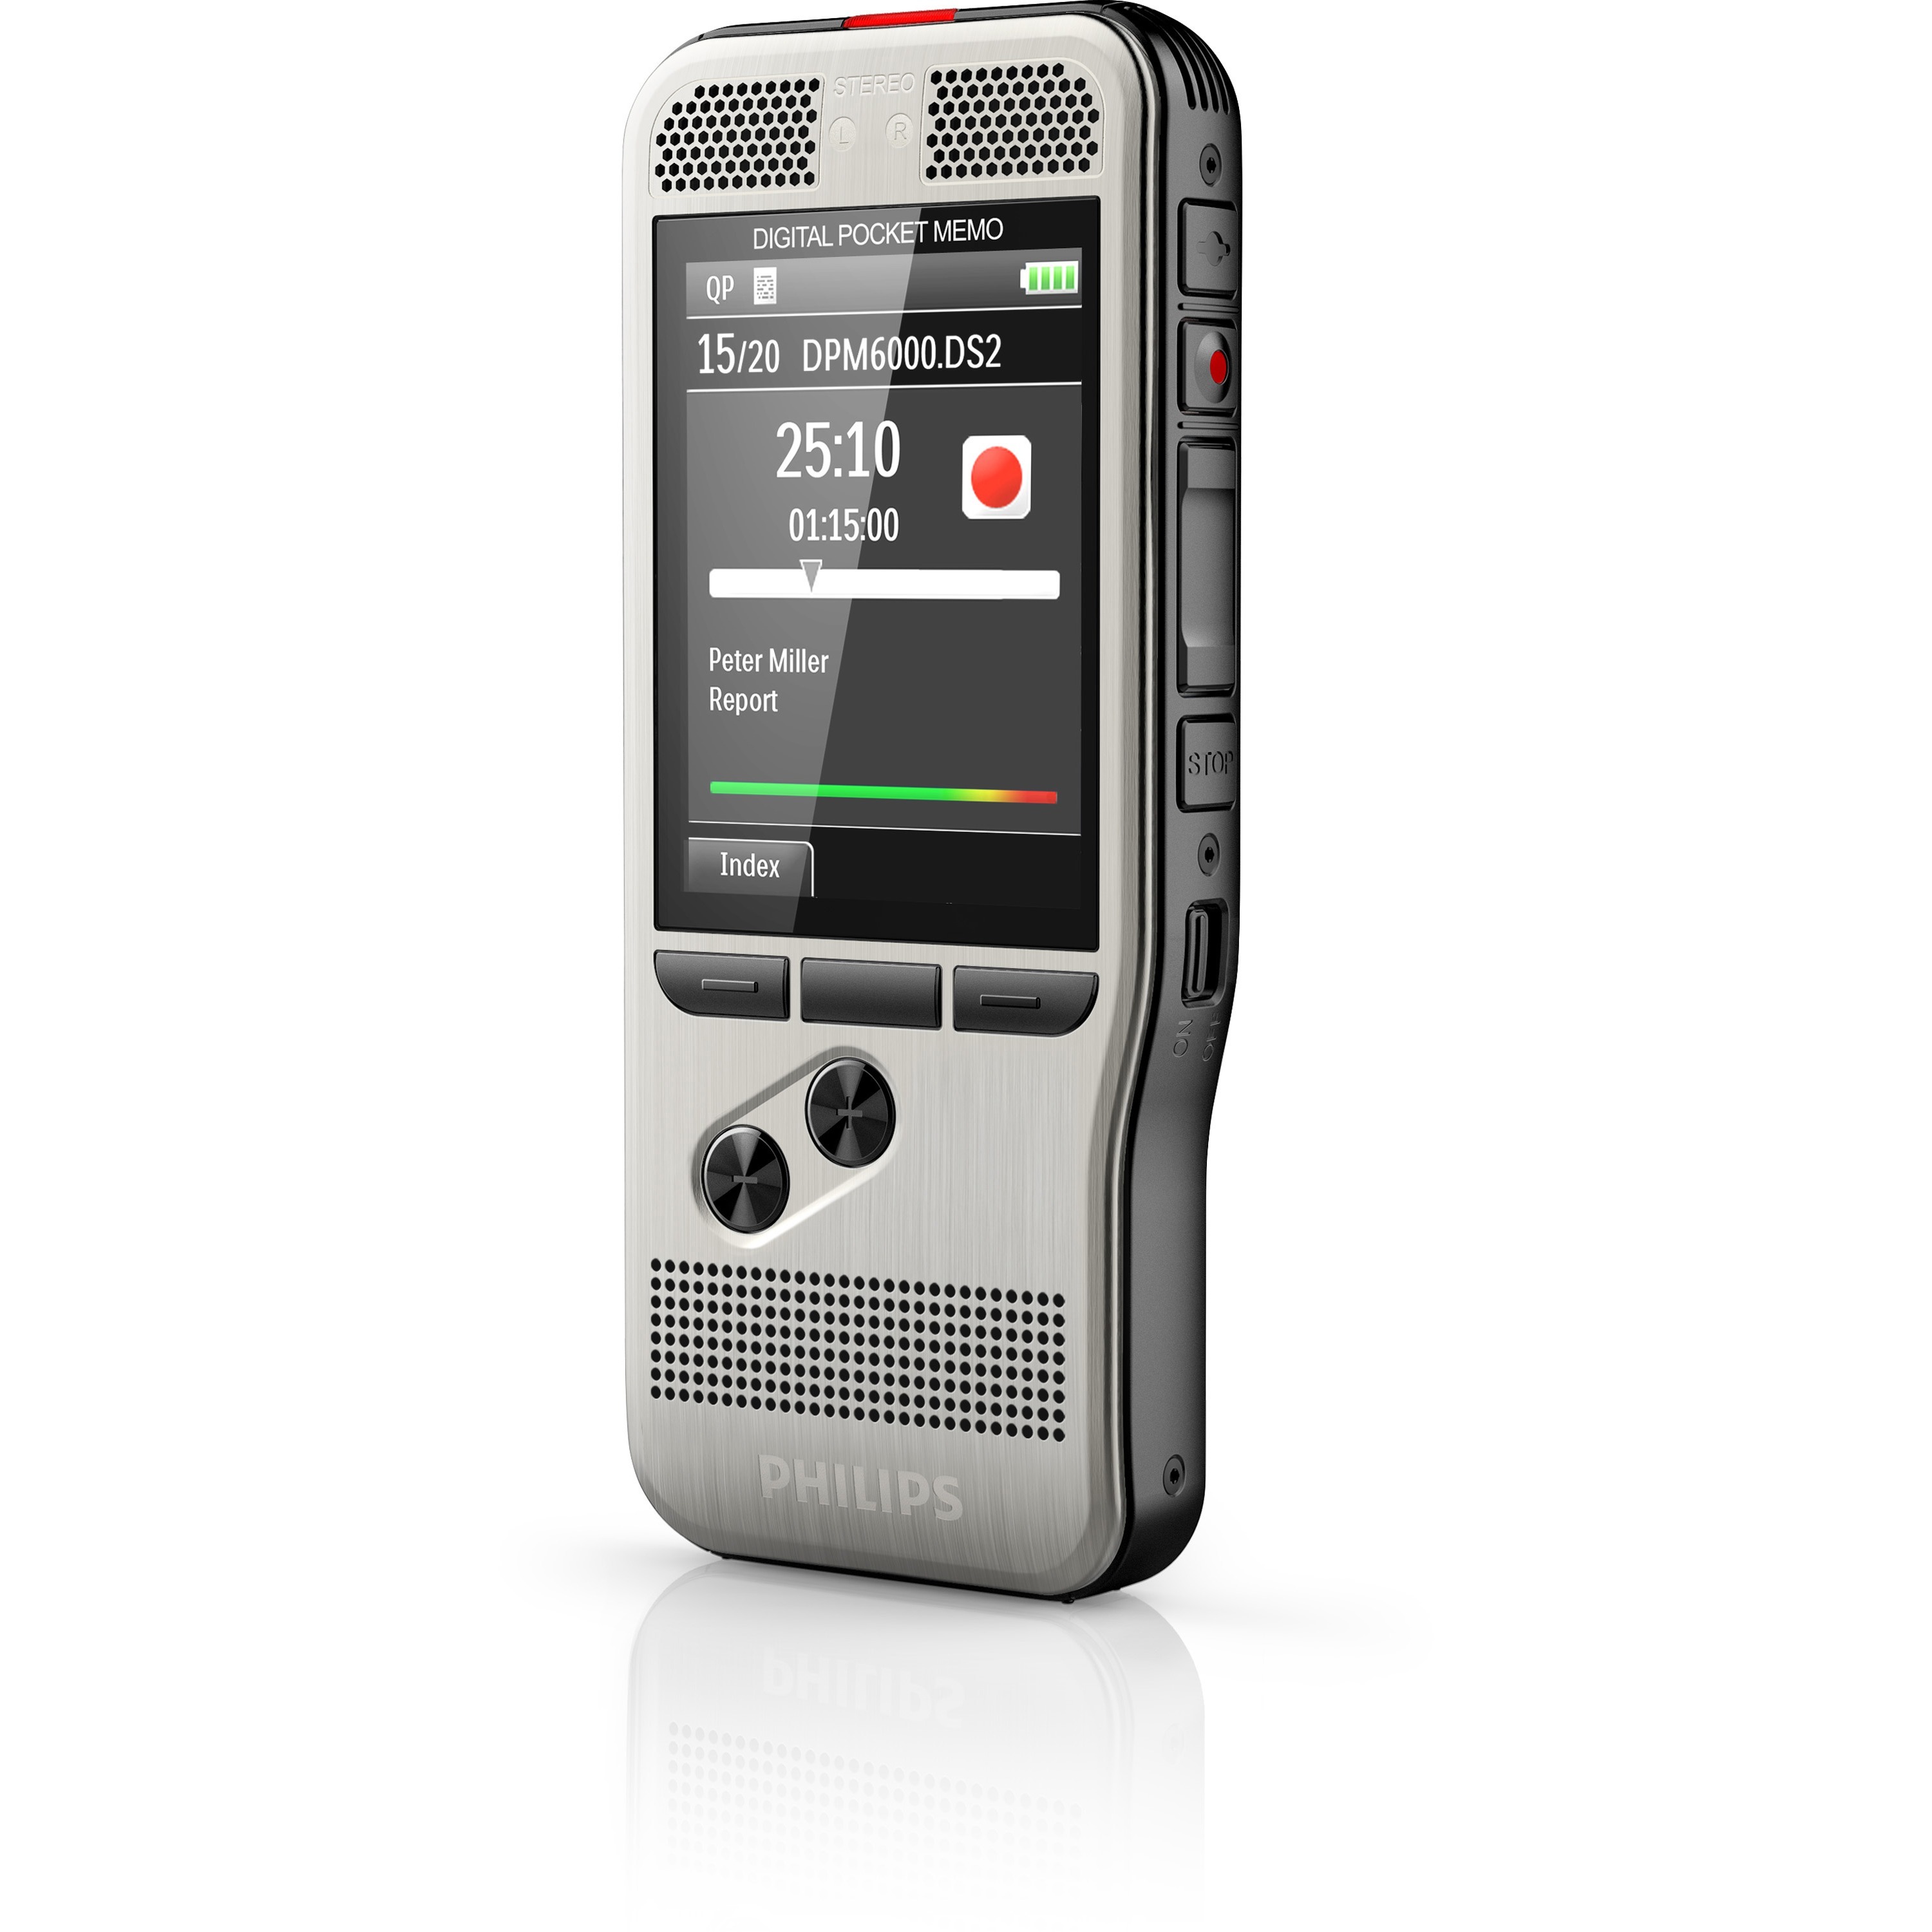 Philips Pocket Memo 6000 Digital Recorder, Push Button, 2GB, Silver - image 4 of 6